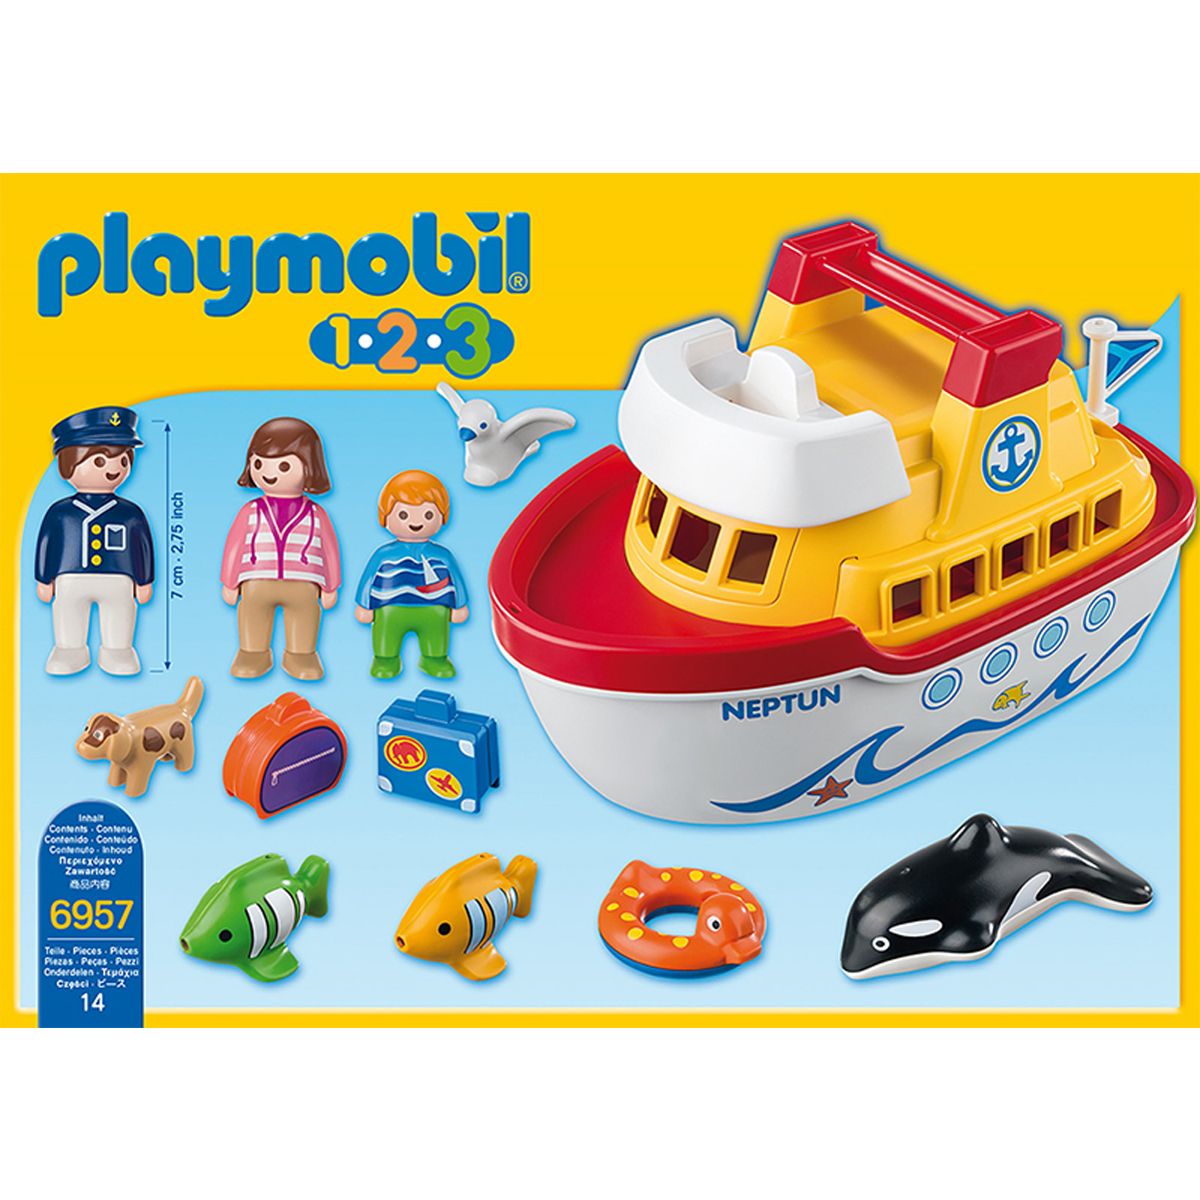 bateau playmobil 123